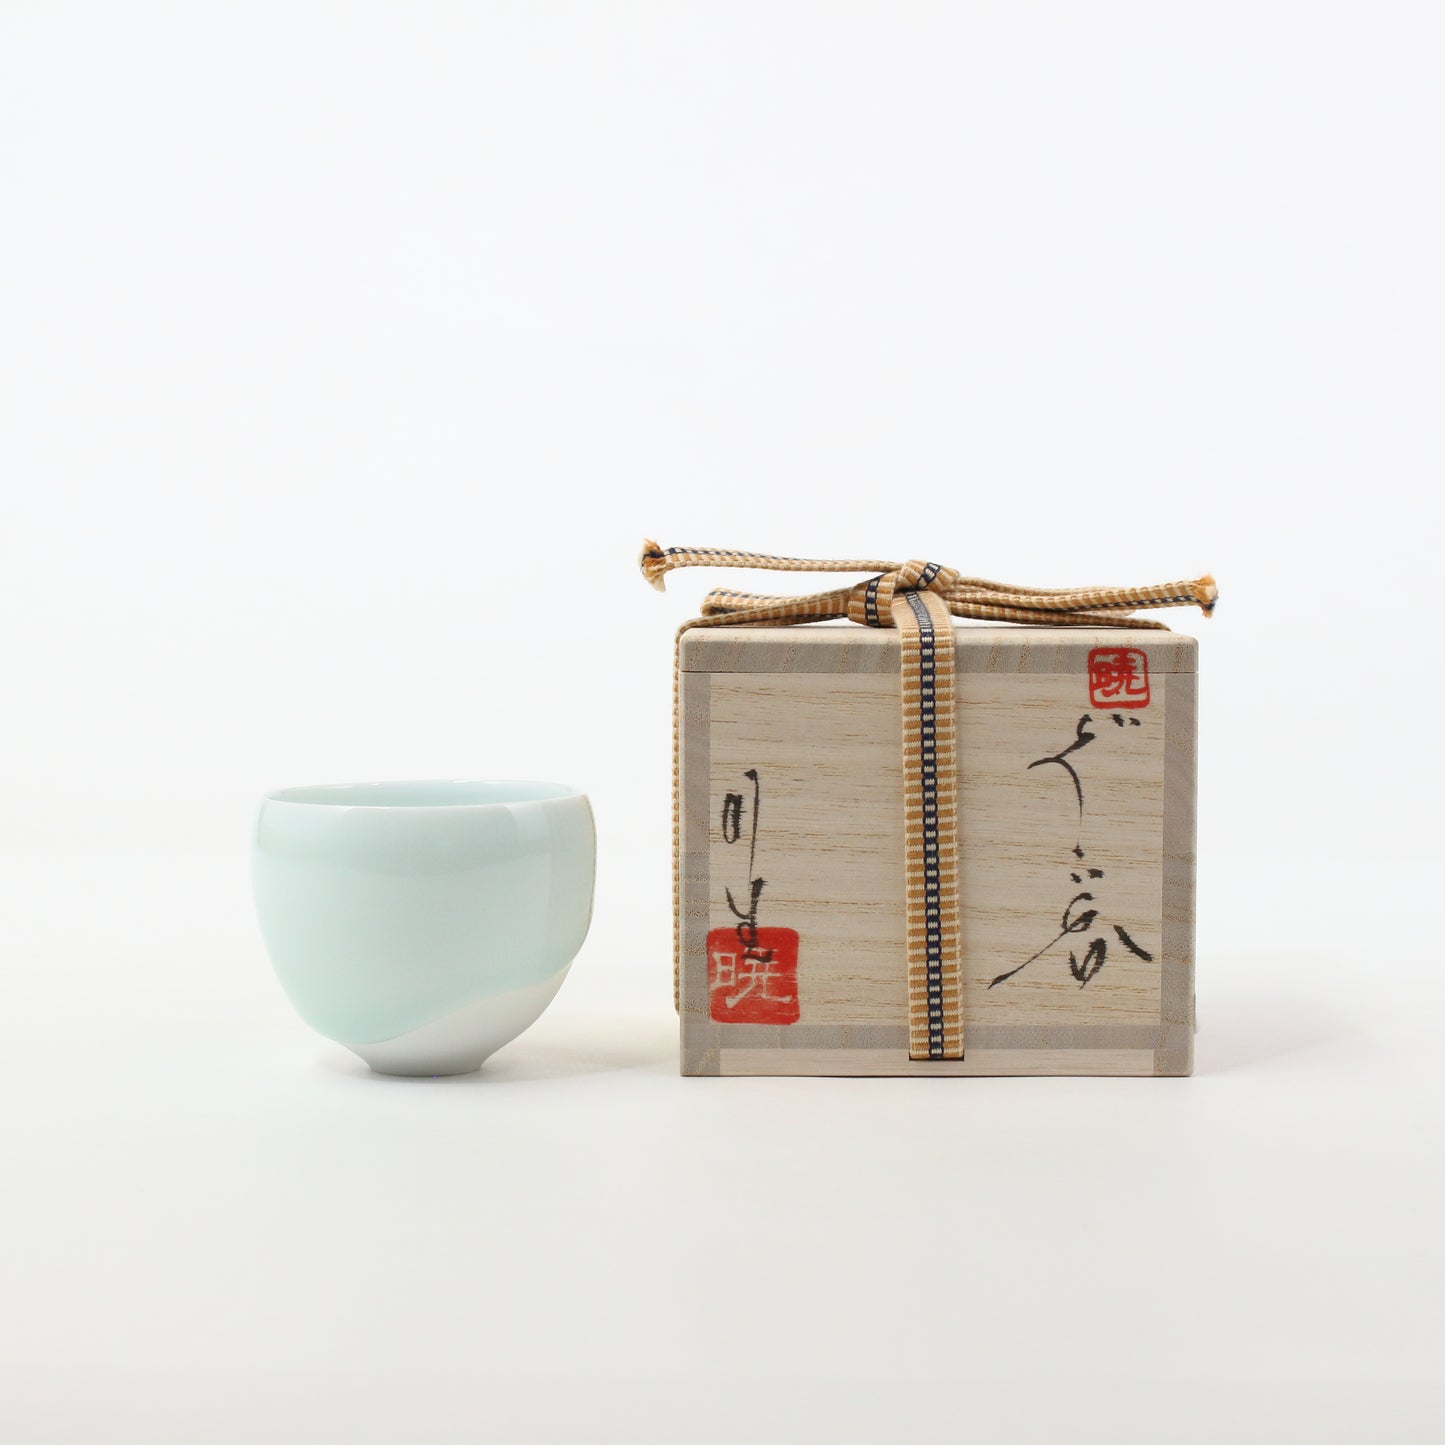 Arita ware | Akio Momota | blue and white porcelain sake cup